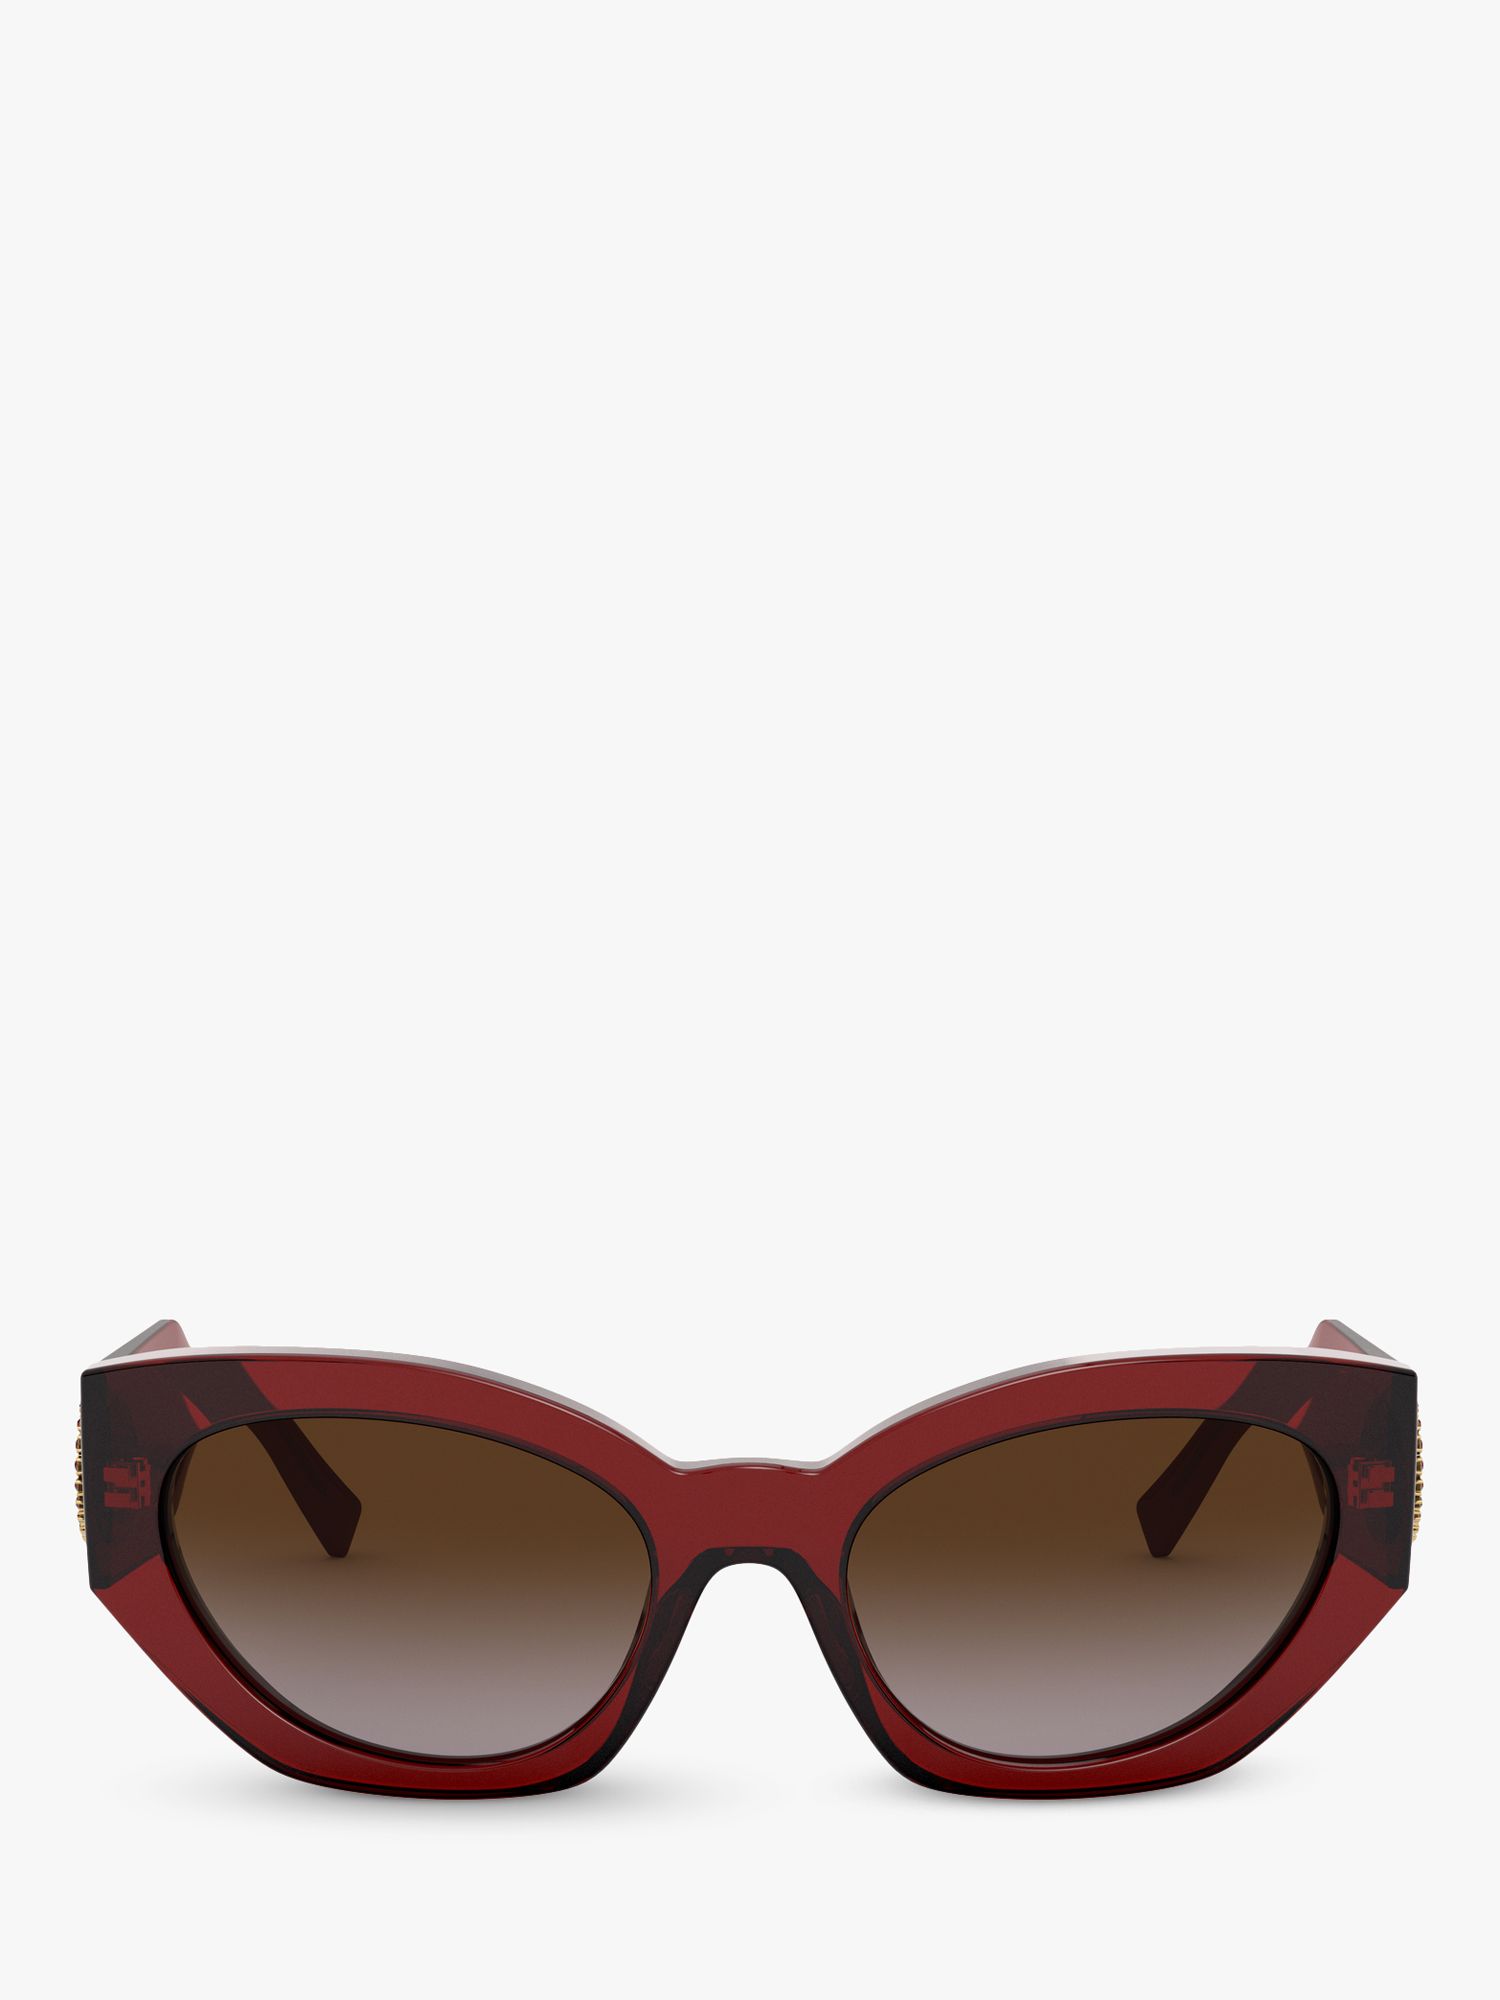 Versace Ve4376b Women S Irregular Sunglasses Burgundy Brown Gradient At John Lewis And Partners